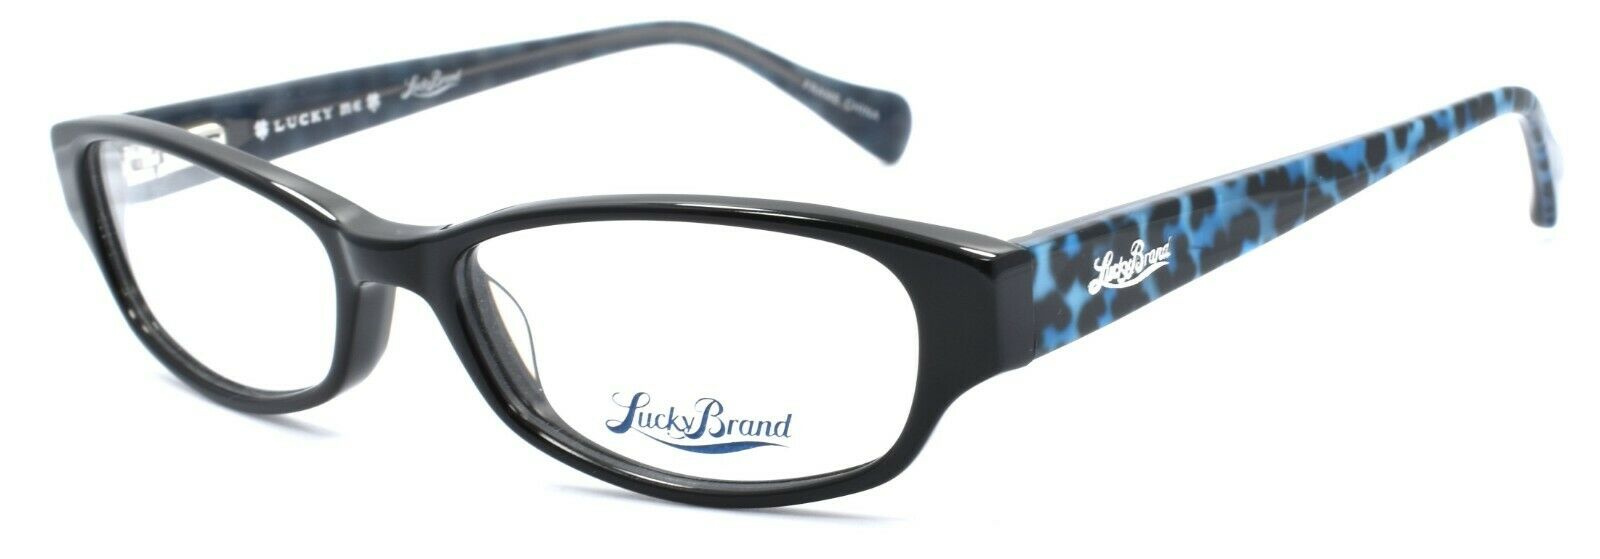 1-LUCKY BRAND Pretend Kids Girls Eyeglasses Frames 49-15-130 Black-751286264012-IKSpecs